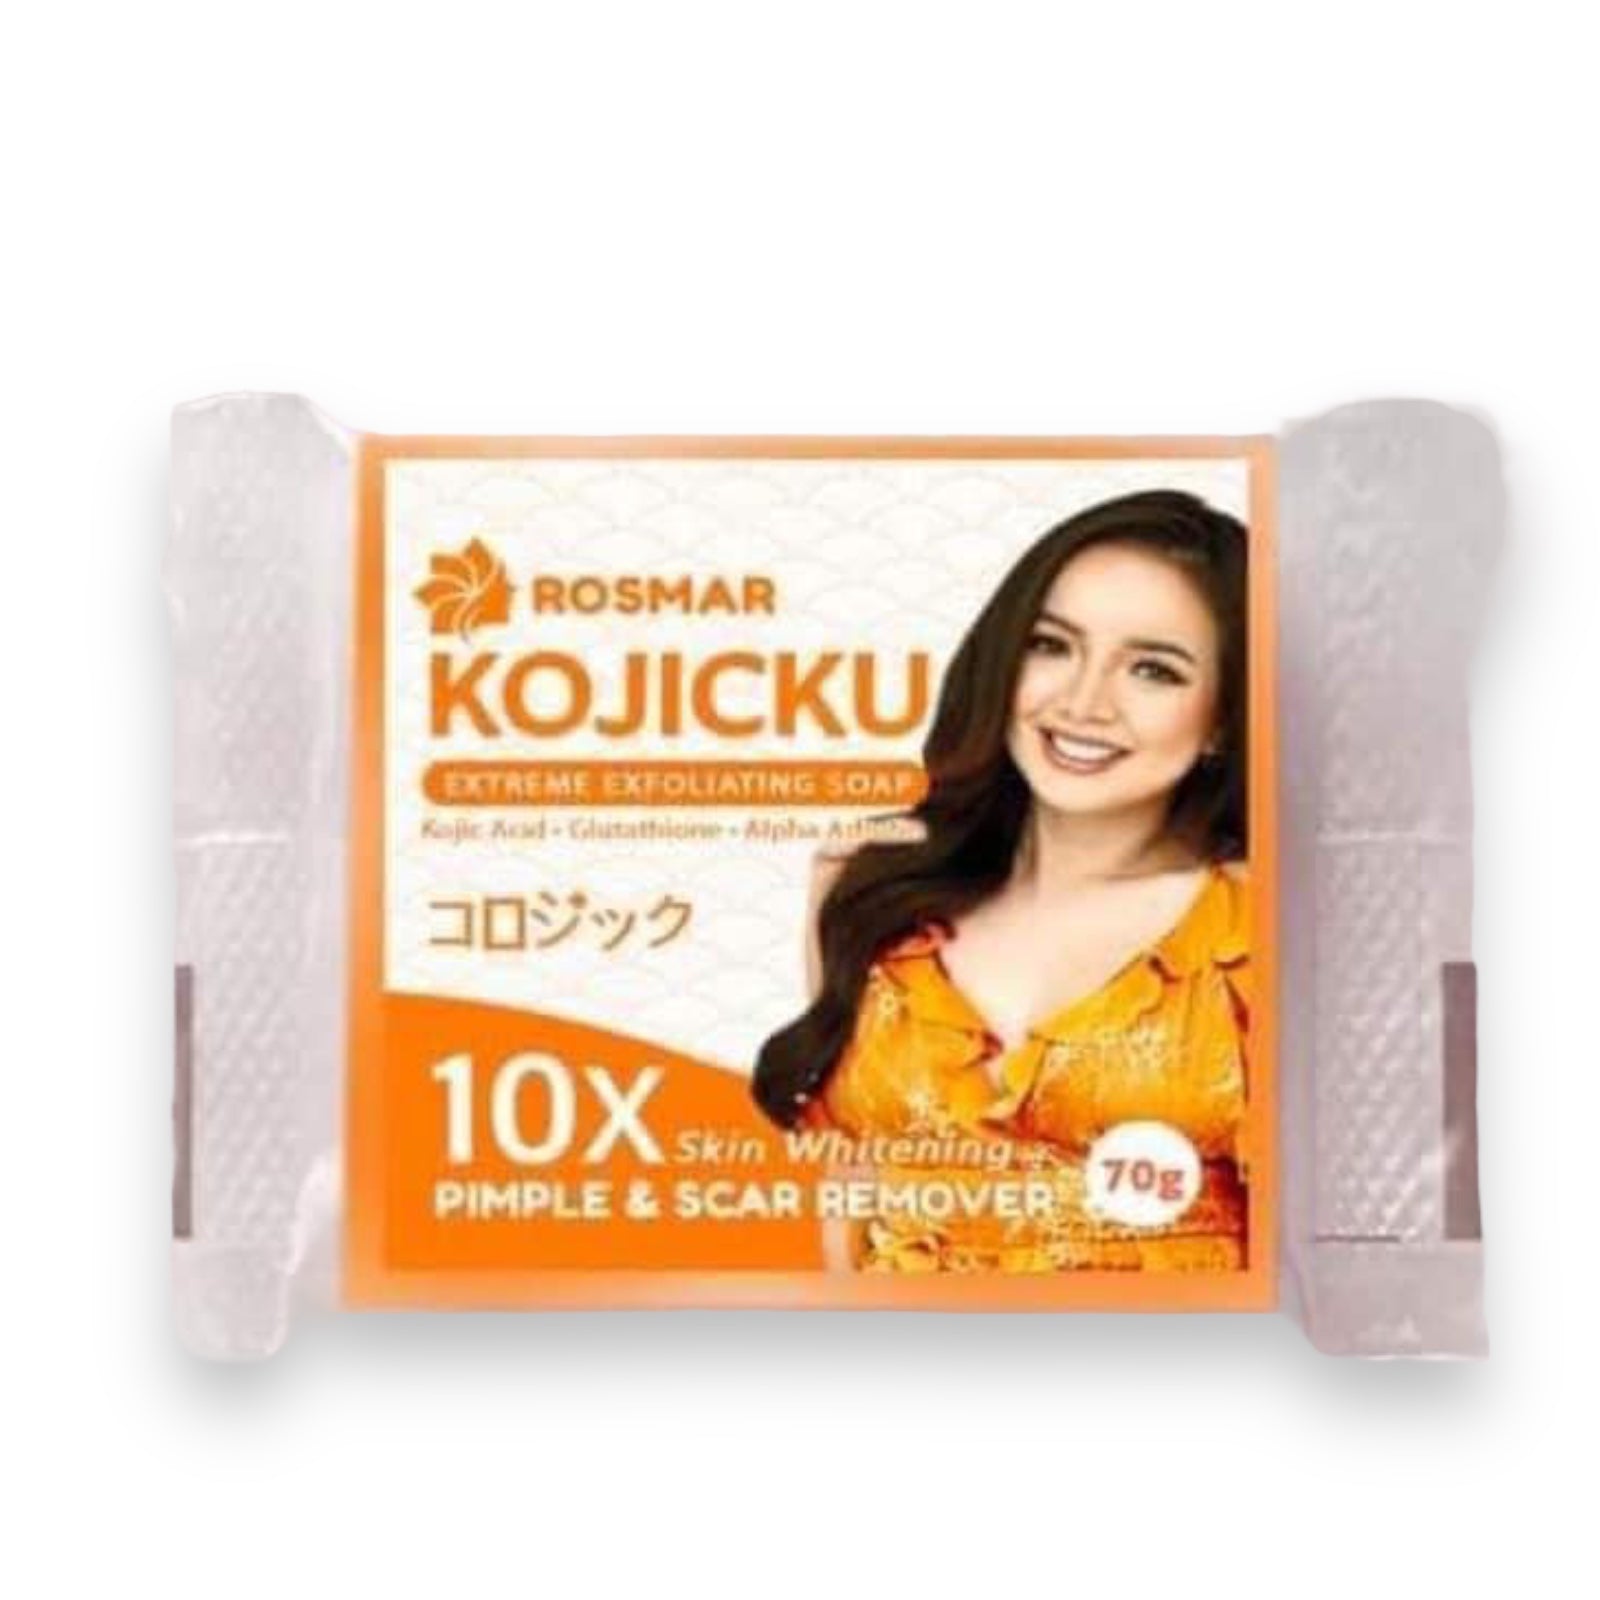 Rosmar - Kojicku Extreme Exfoliating Soap 70g